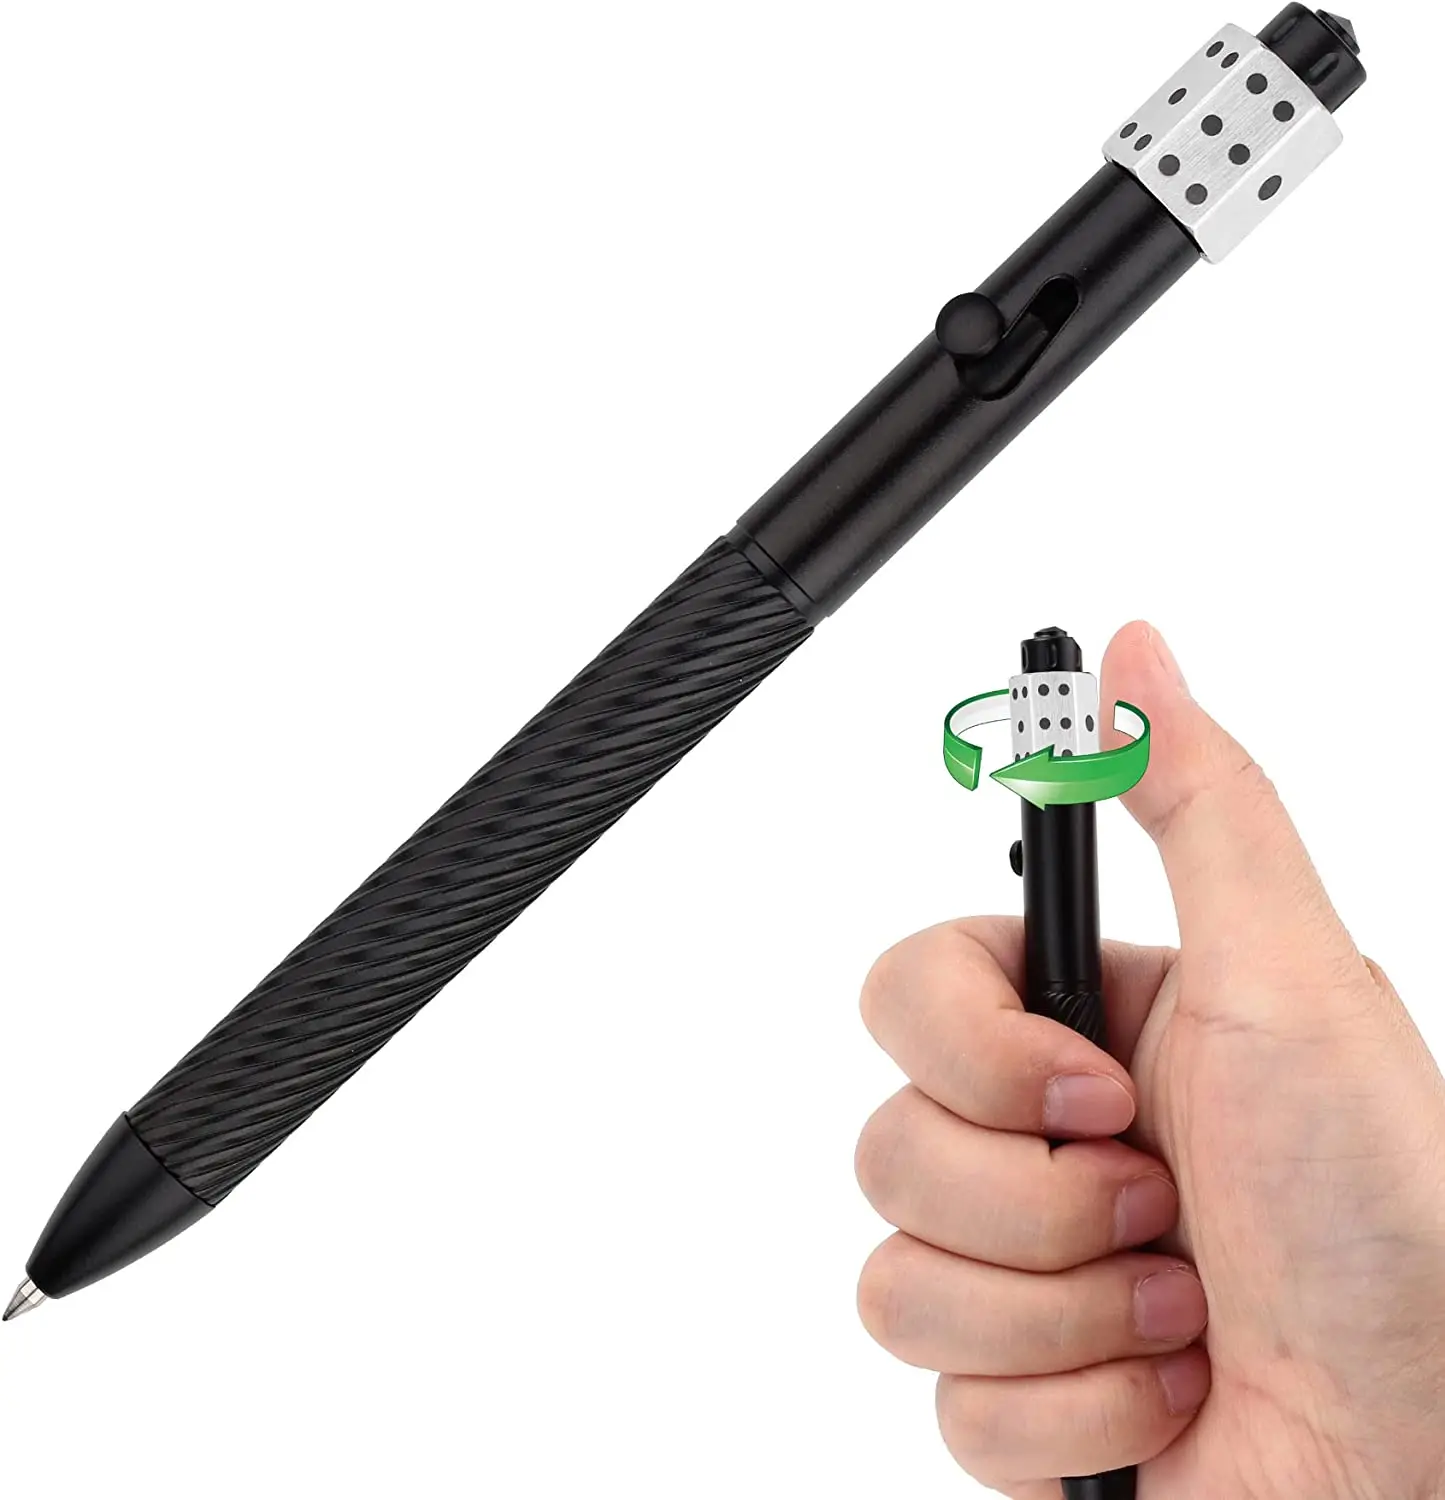 

SMOOTHERPRO Fidget Bolt Action Pen Dice Compatible with Pilot G2 Refill Ball Pen Stress Relief Anxiety Reducer Gadget Creative